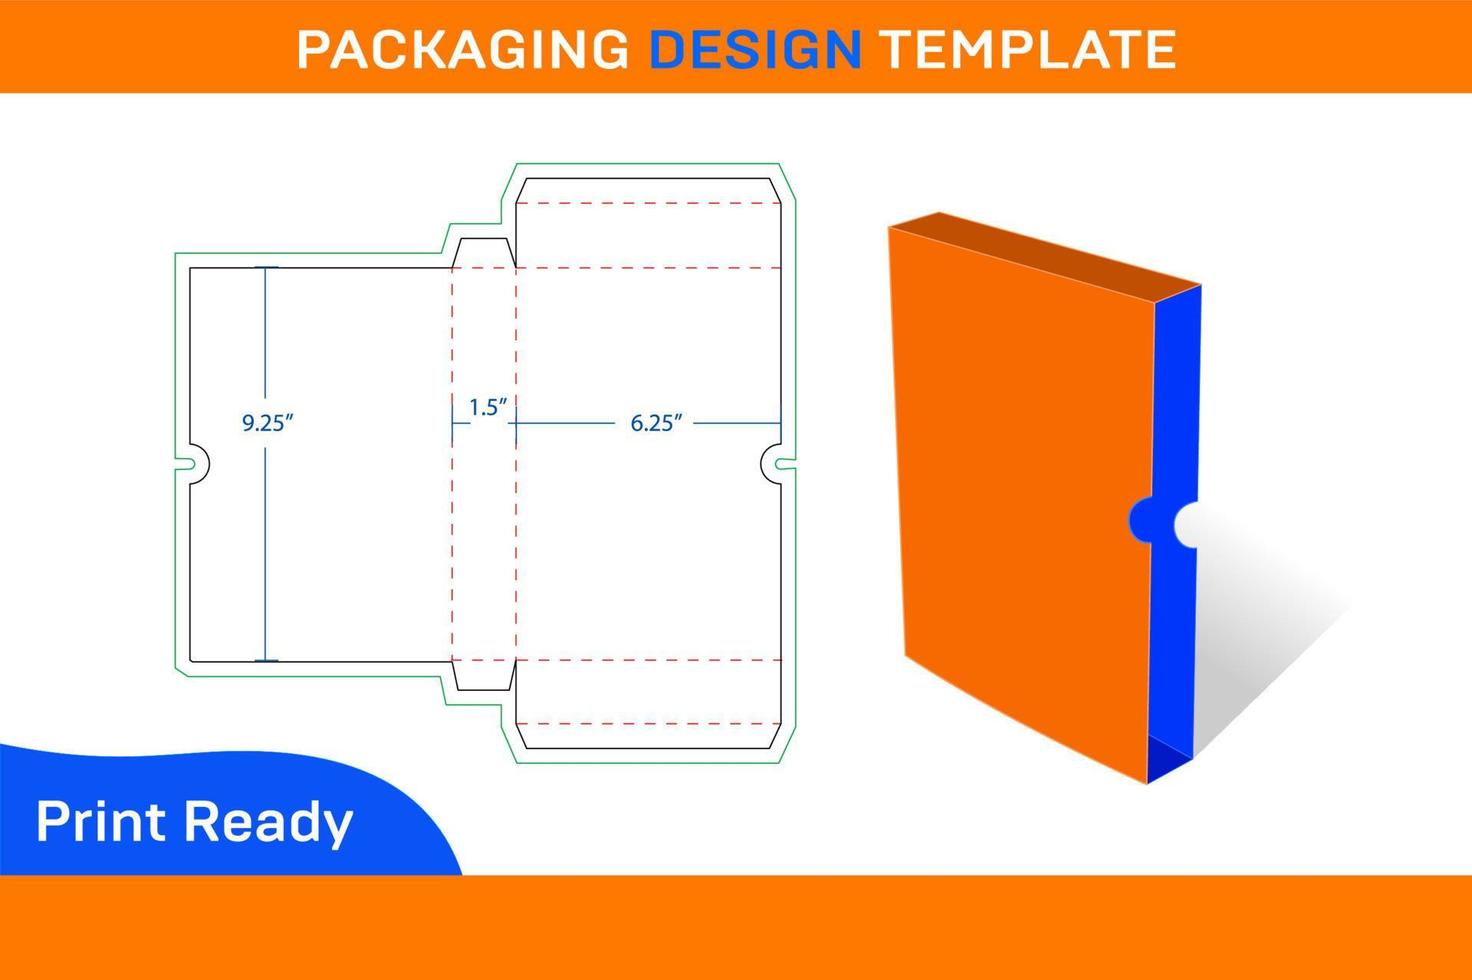 caixa de livro aberta lateral 9 x 6 x 1,5 polegadas, modelo dieline de caixa de capa de livro e caixa 3d vetor